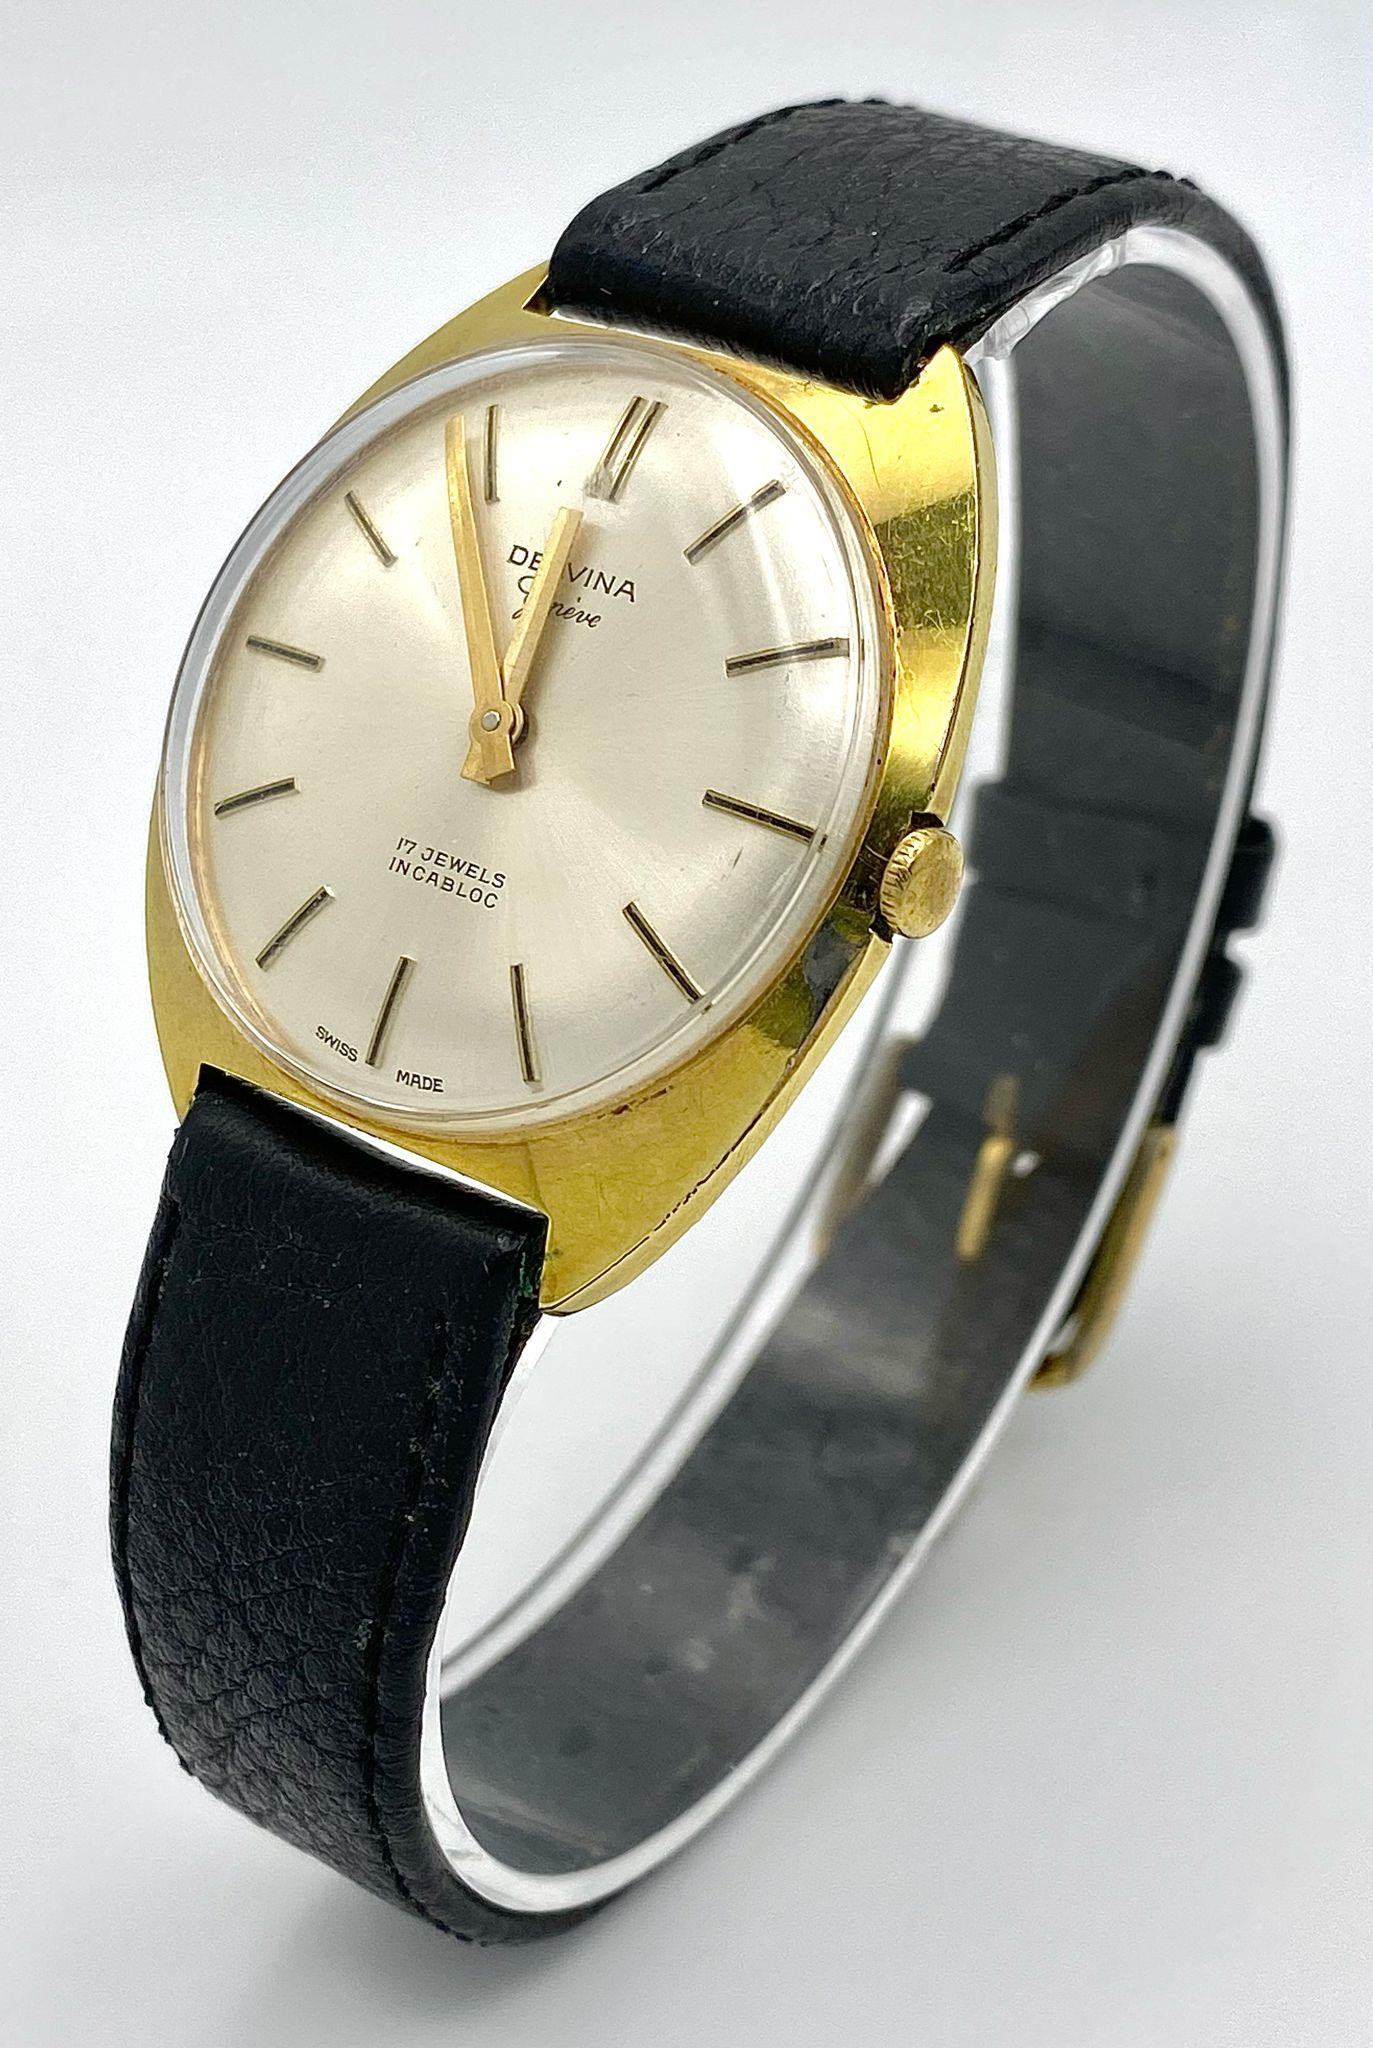 A Vintage 17 Jewels Delvina Mechanical Gents Watch. Black leather strap. Gilded case - 36mm. - Image 2 of 7